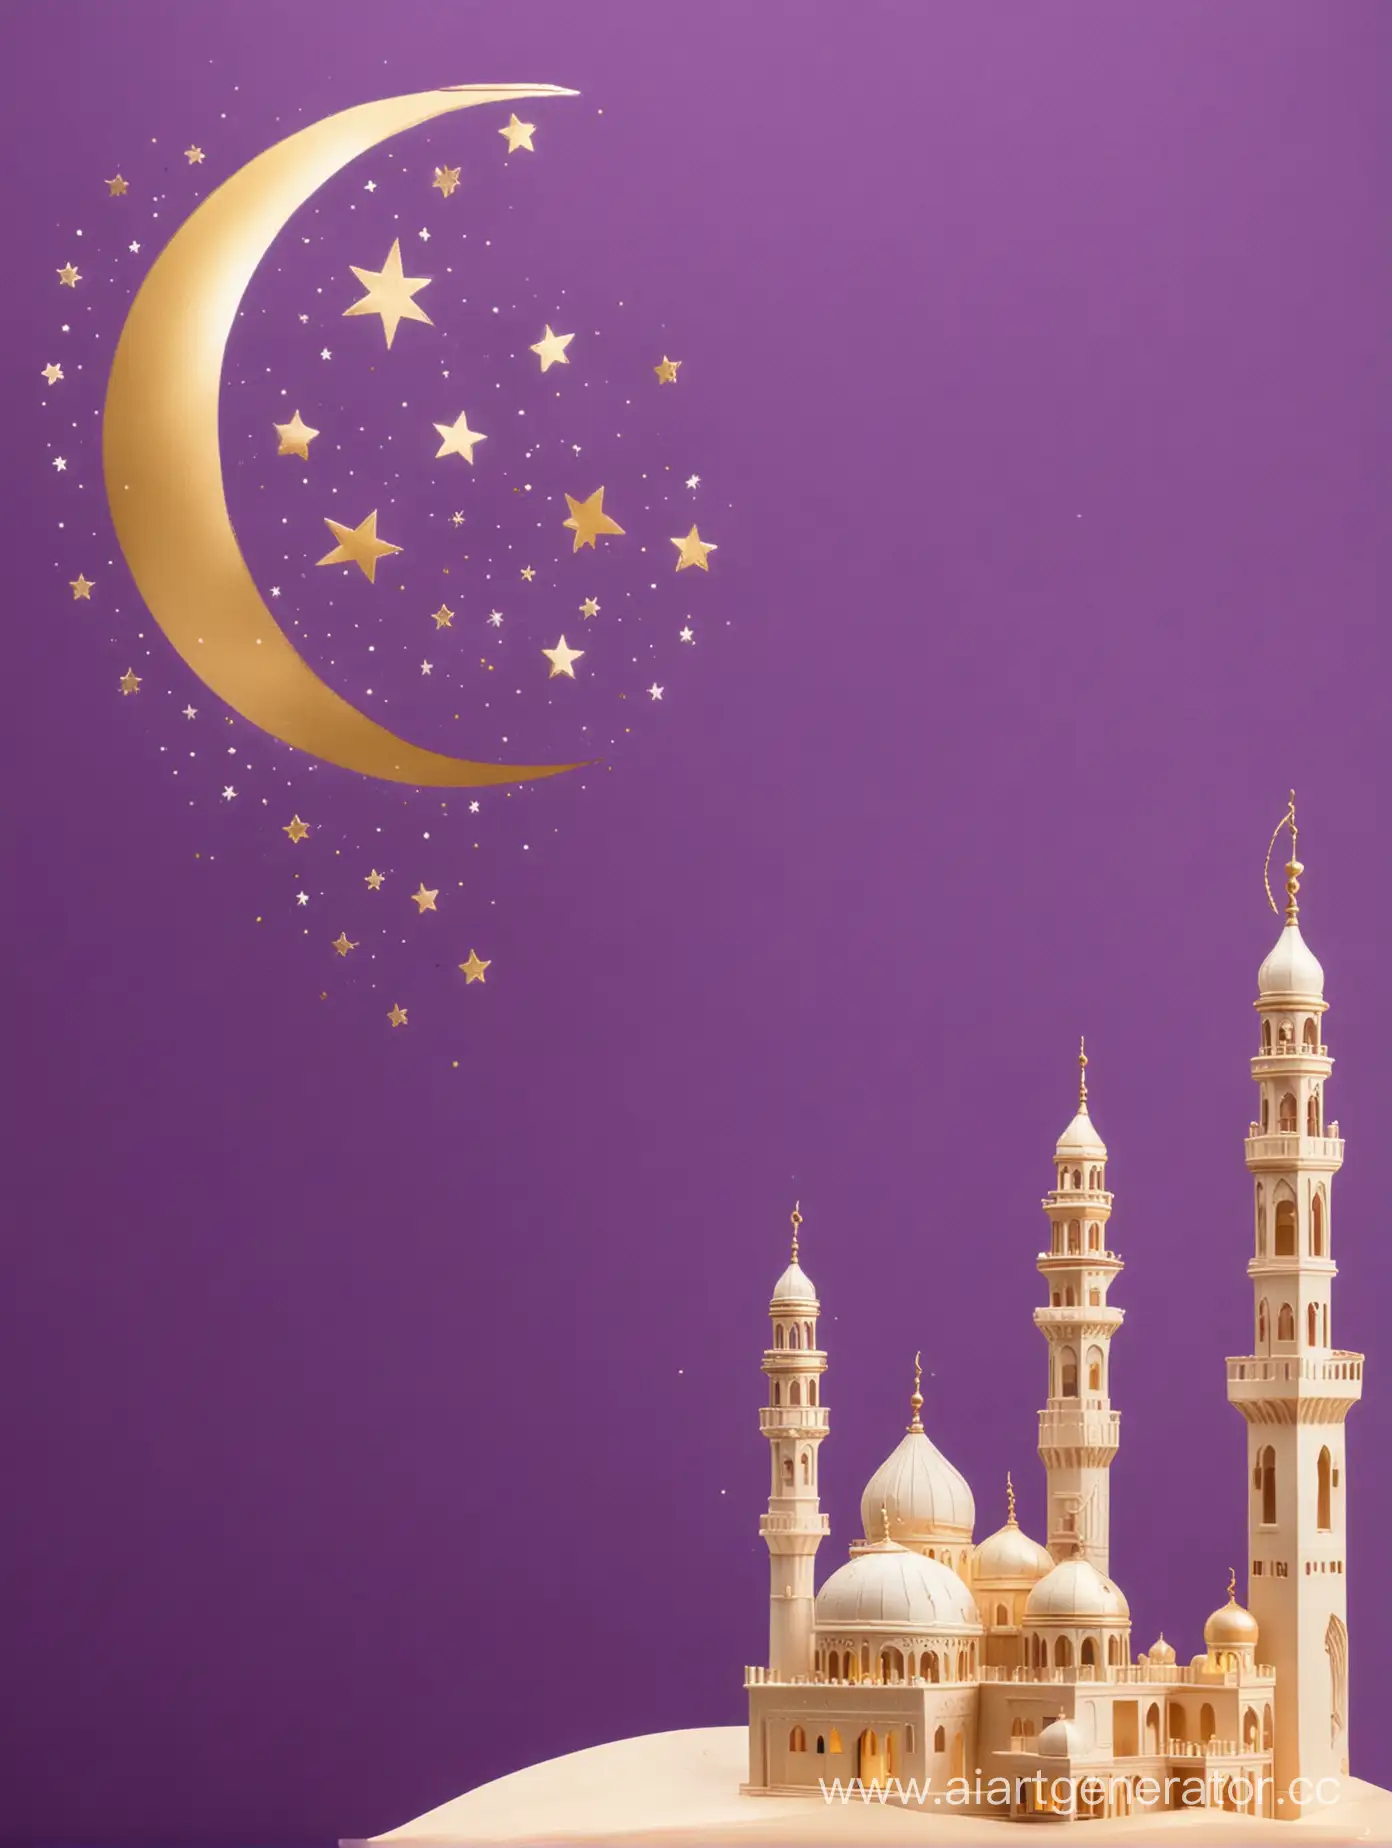 Golden-and-Purple-Ramadan-Scene-with-Crescent-Moon-and-Minaret